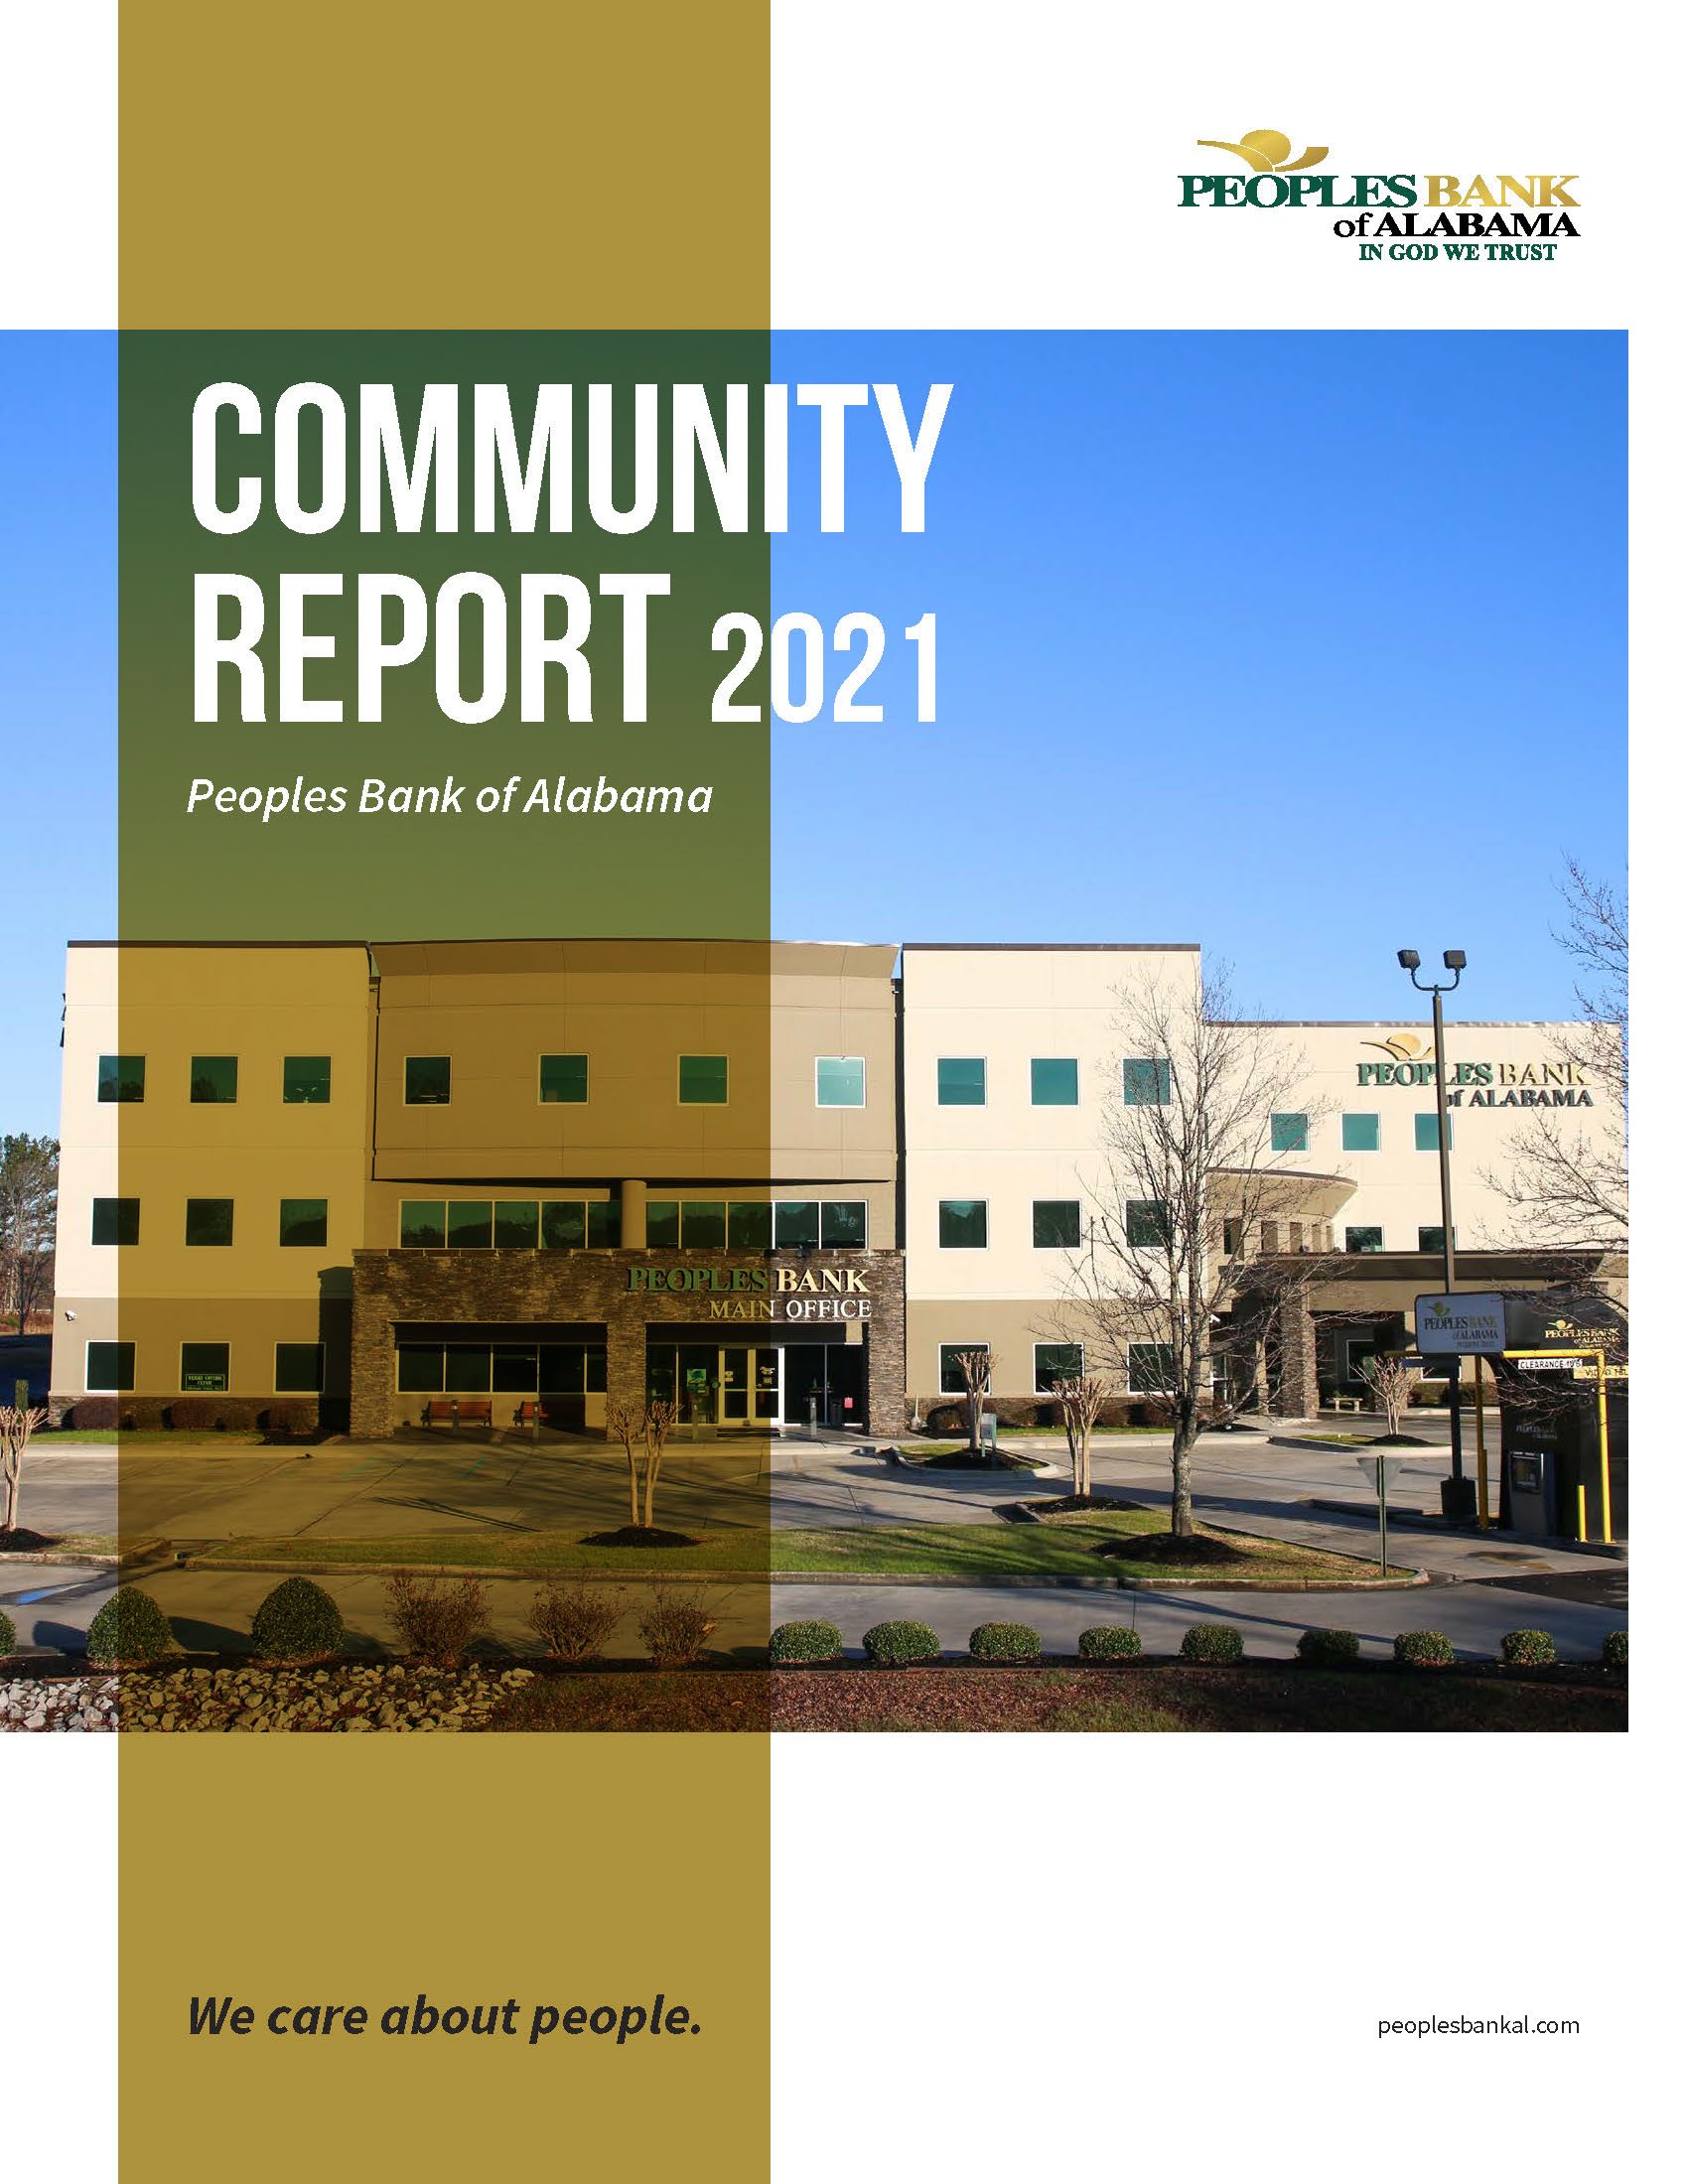 2021 Community Report